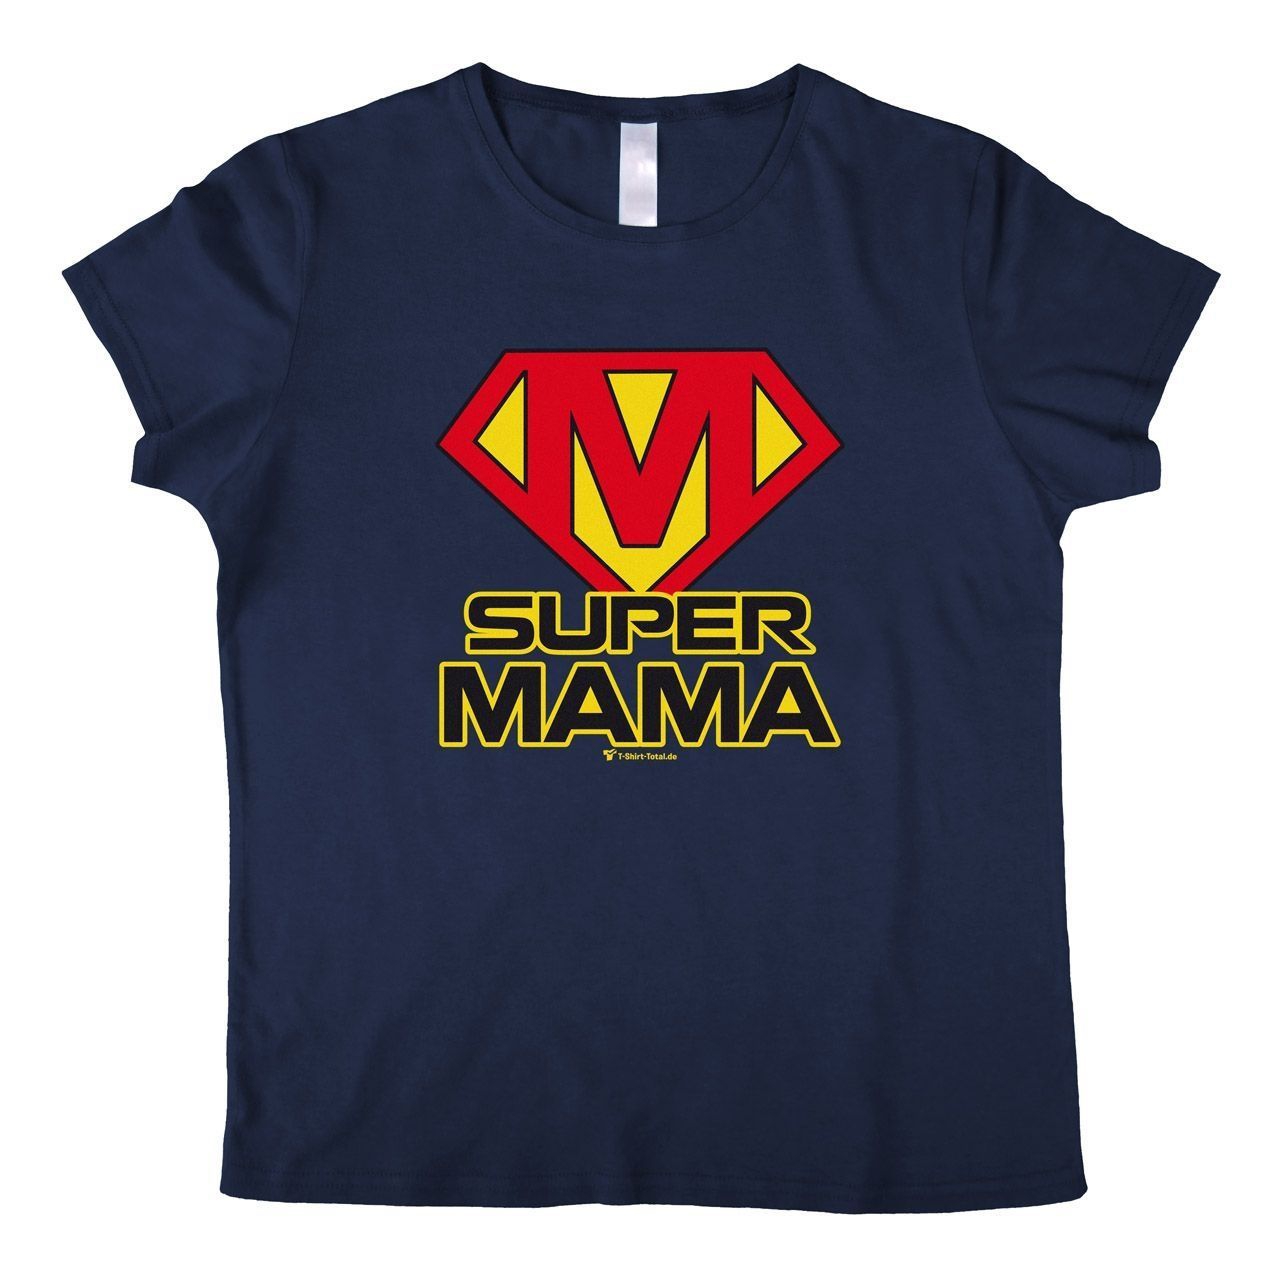 Super Mama Woman T-Shirt navy 2-Extra Large